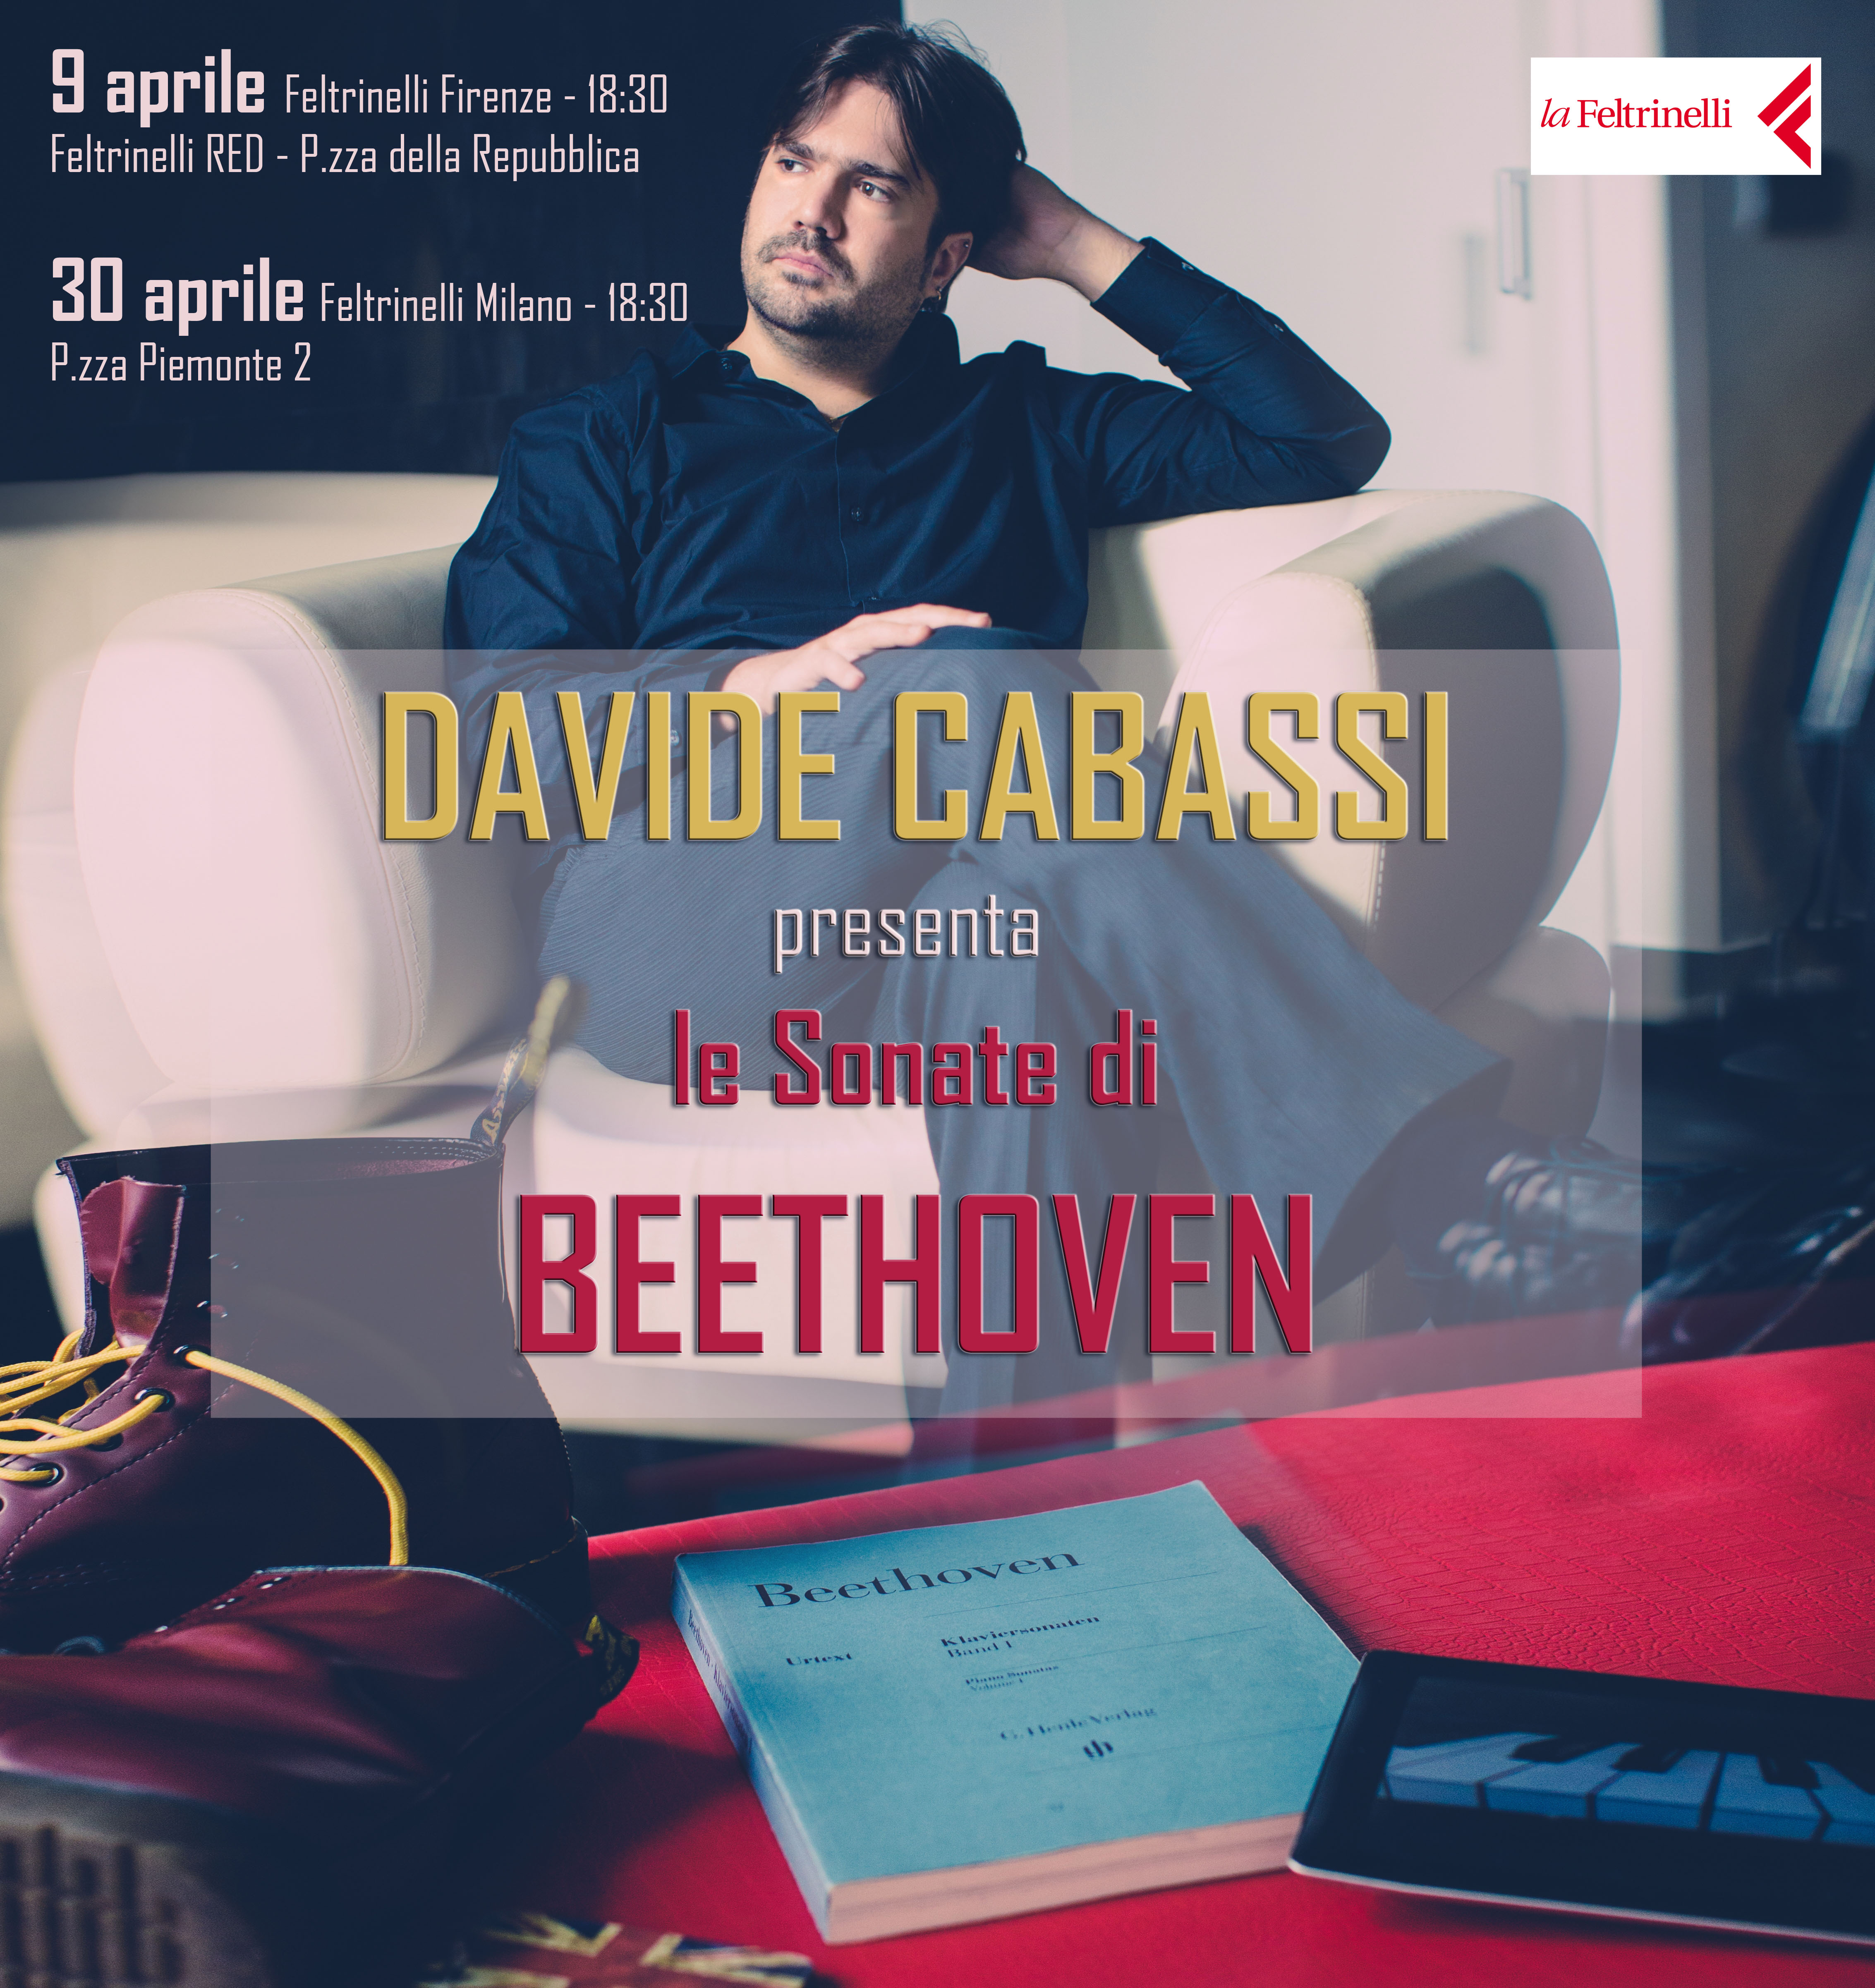 Davide Cabassi presenta l'album in Feltrinelli